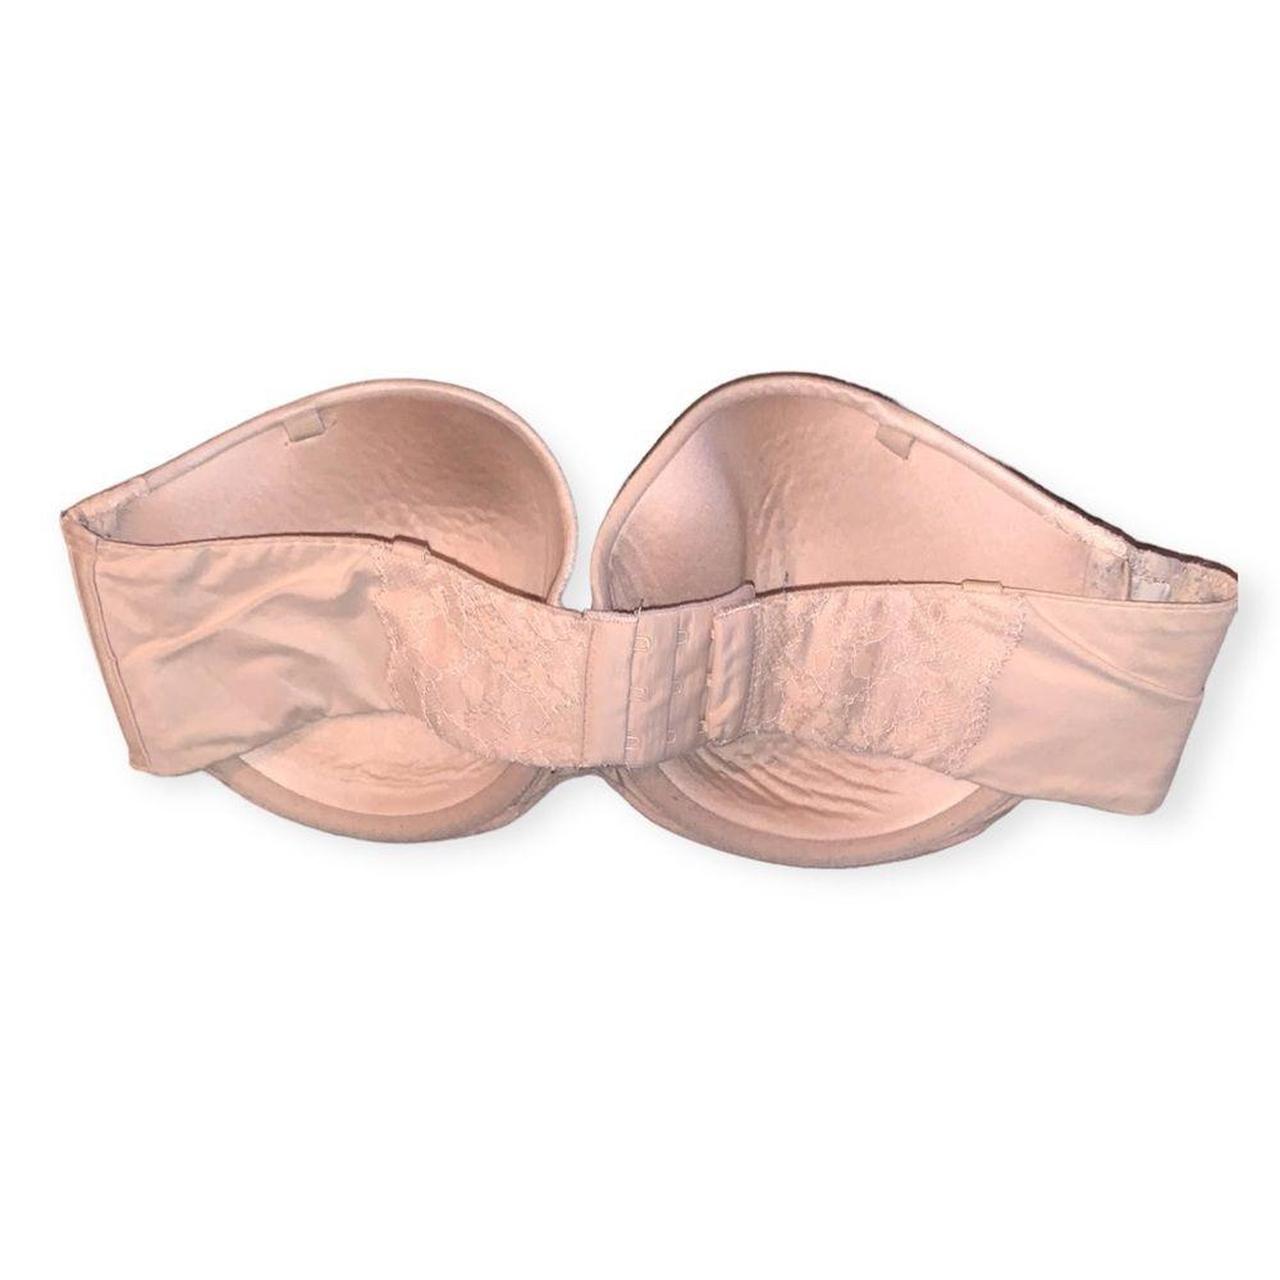 Body by Victoria strapless bra. Size 36d #strapless - Depop